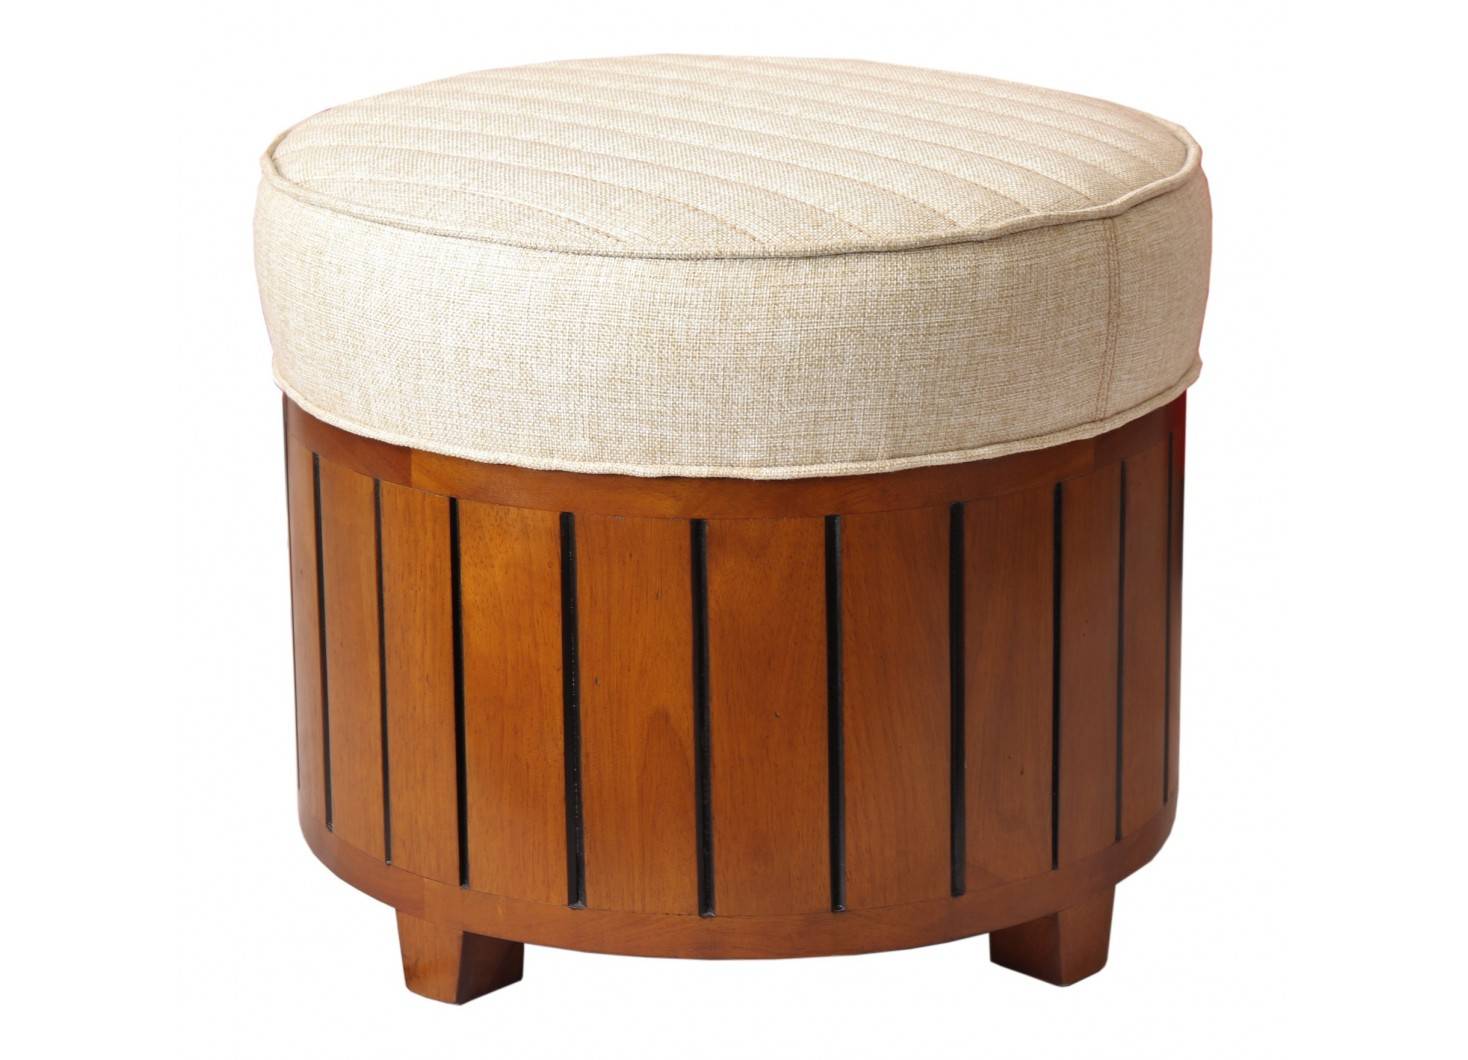 Canoë round footstool - beige fabric